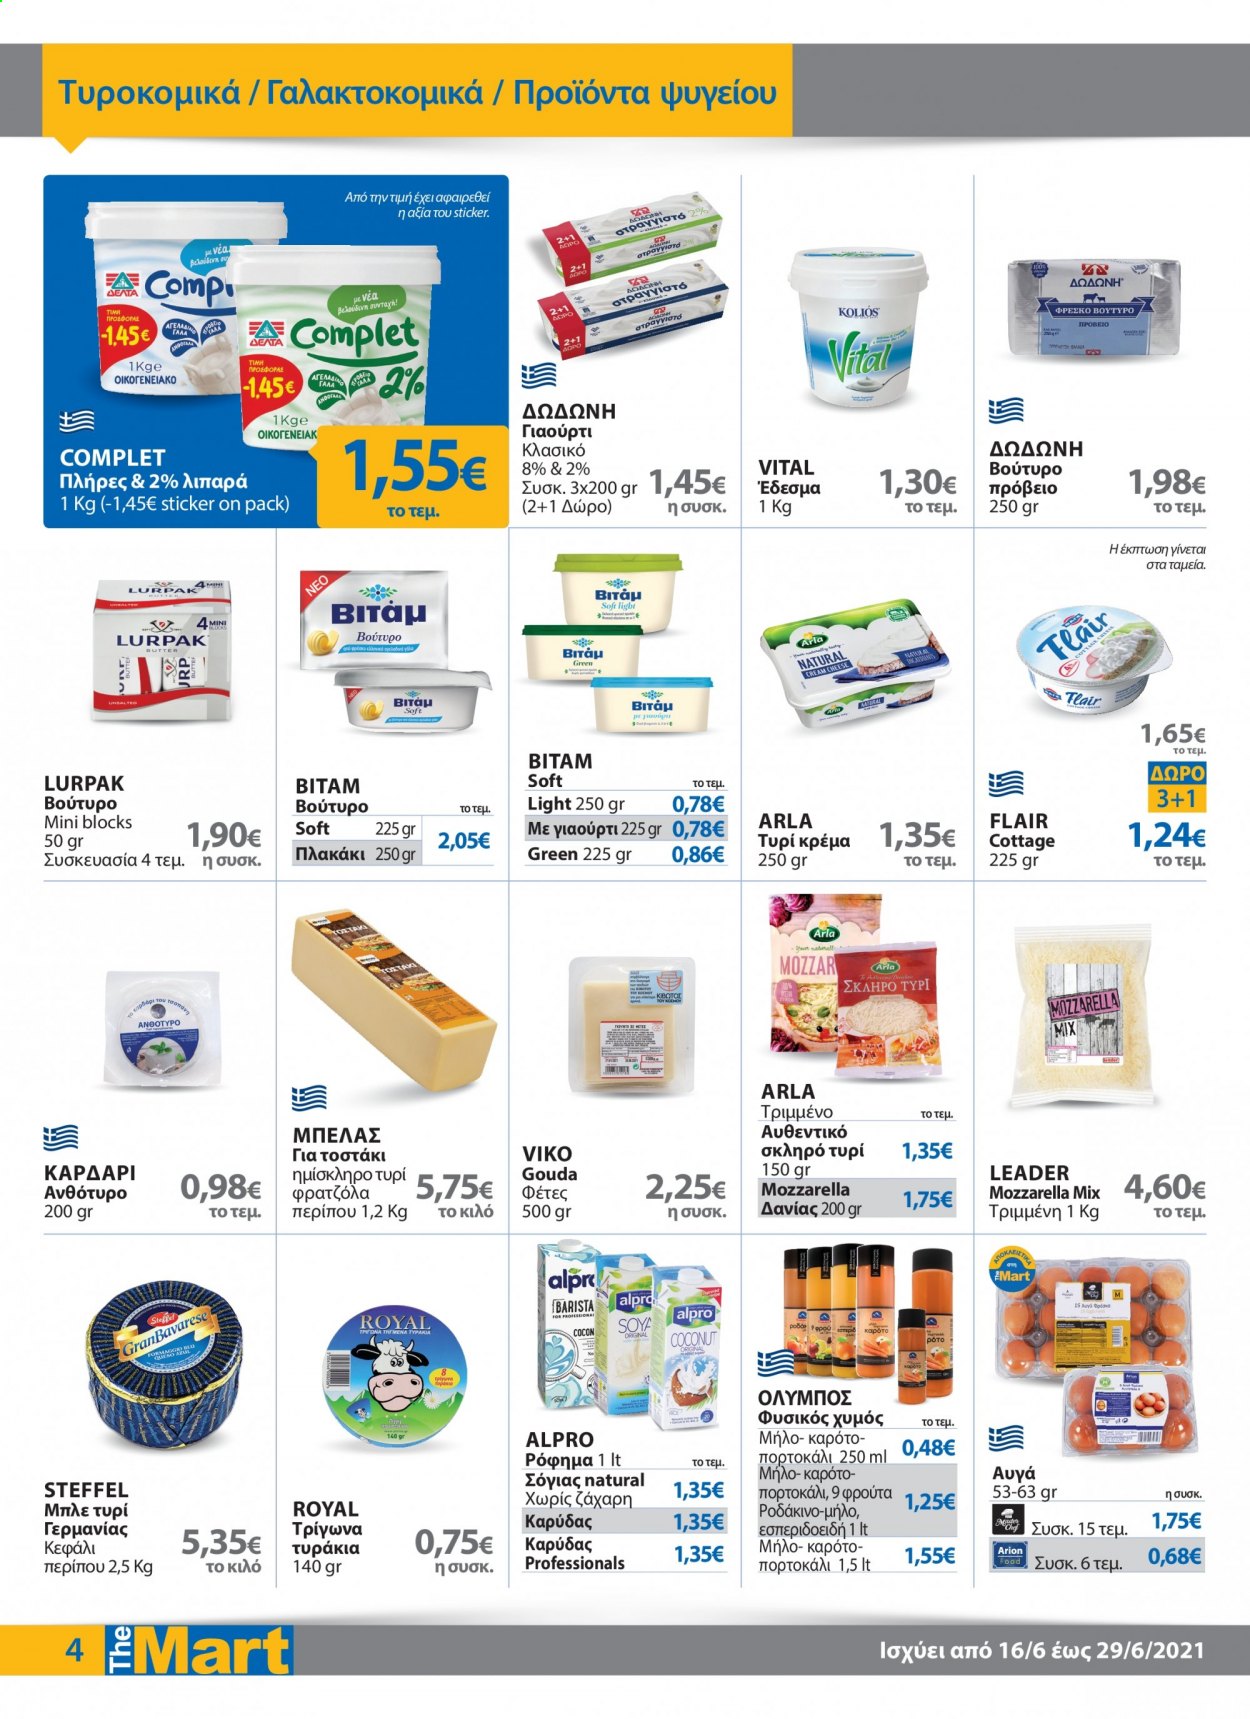 thumbnail - Φυλλάδια The Mart - 16.06.2021 - 29.06.2021 - Εκπτωτικά προϊόντα - gouda, μπλε τυρί, τυρί κρέμα, γιαούρτι, αυγά, βούτυρο, ζάχαρη. Σελίδα 4.